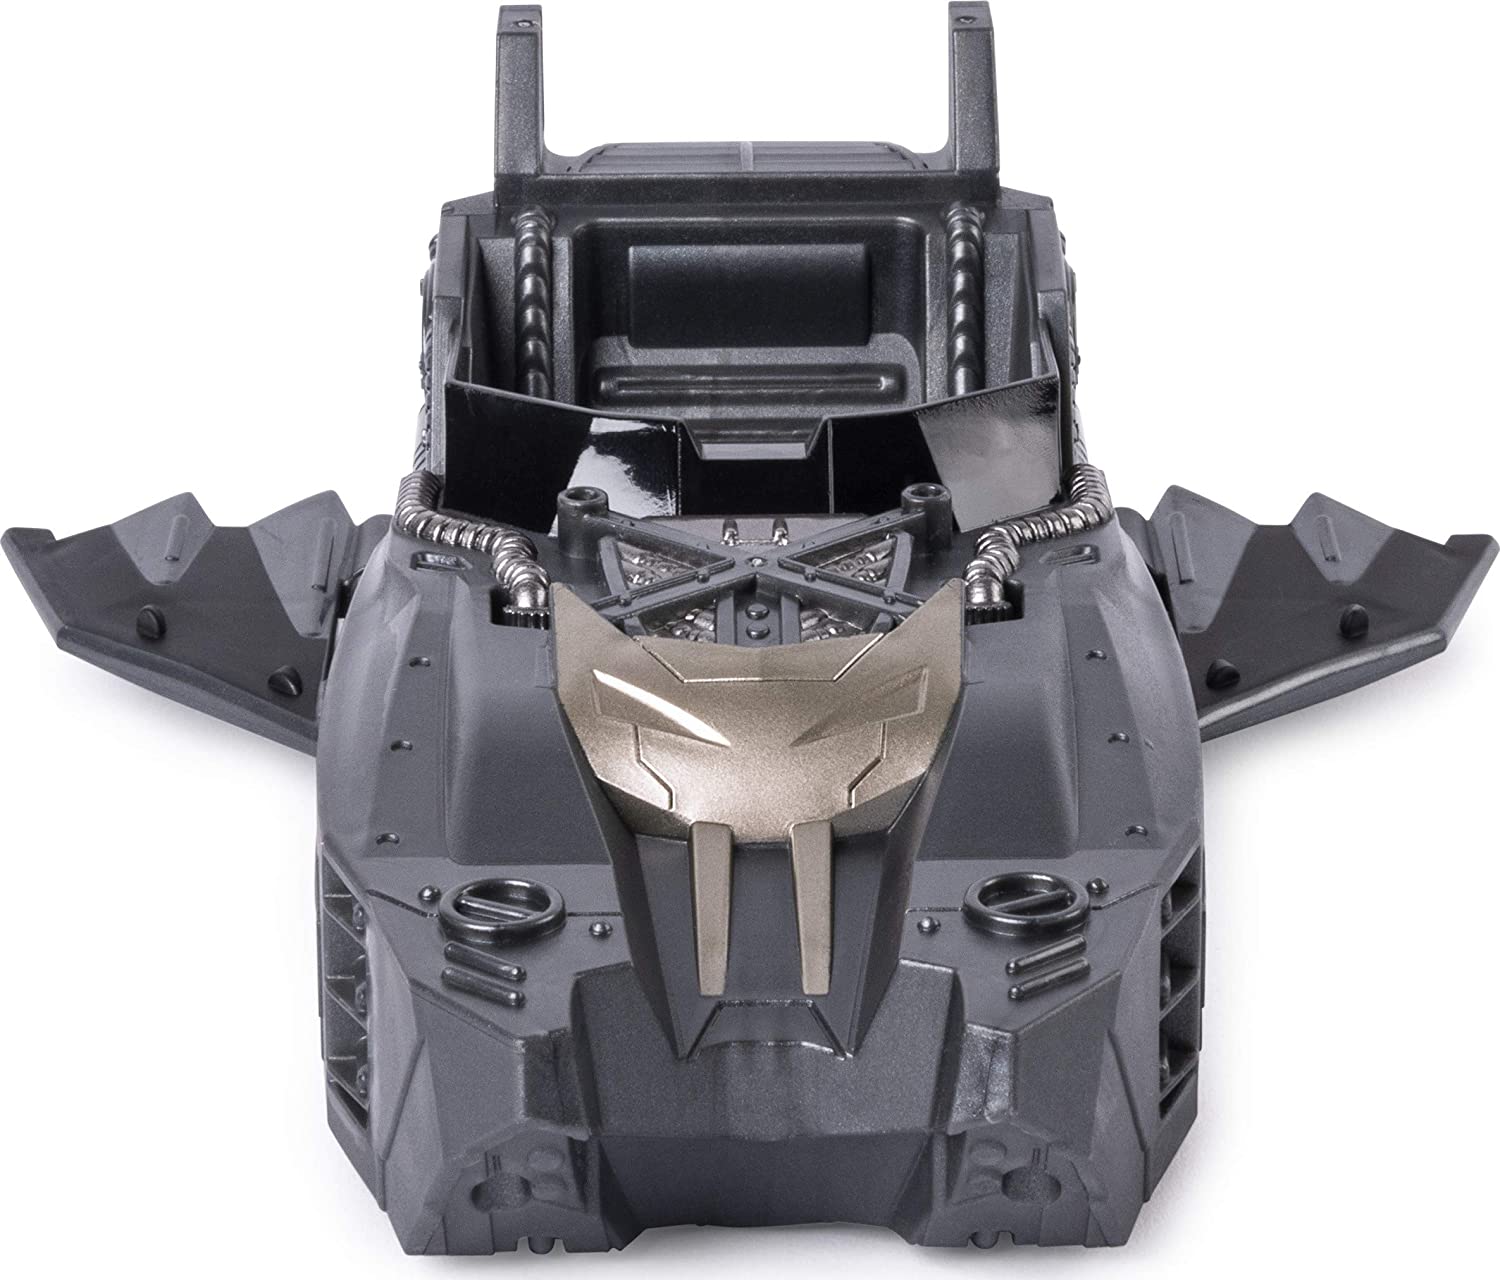 Batman Transforming Batmobile for 4 inch Figure